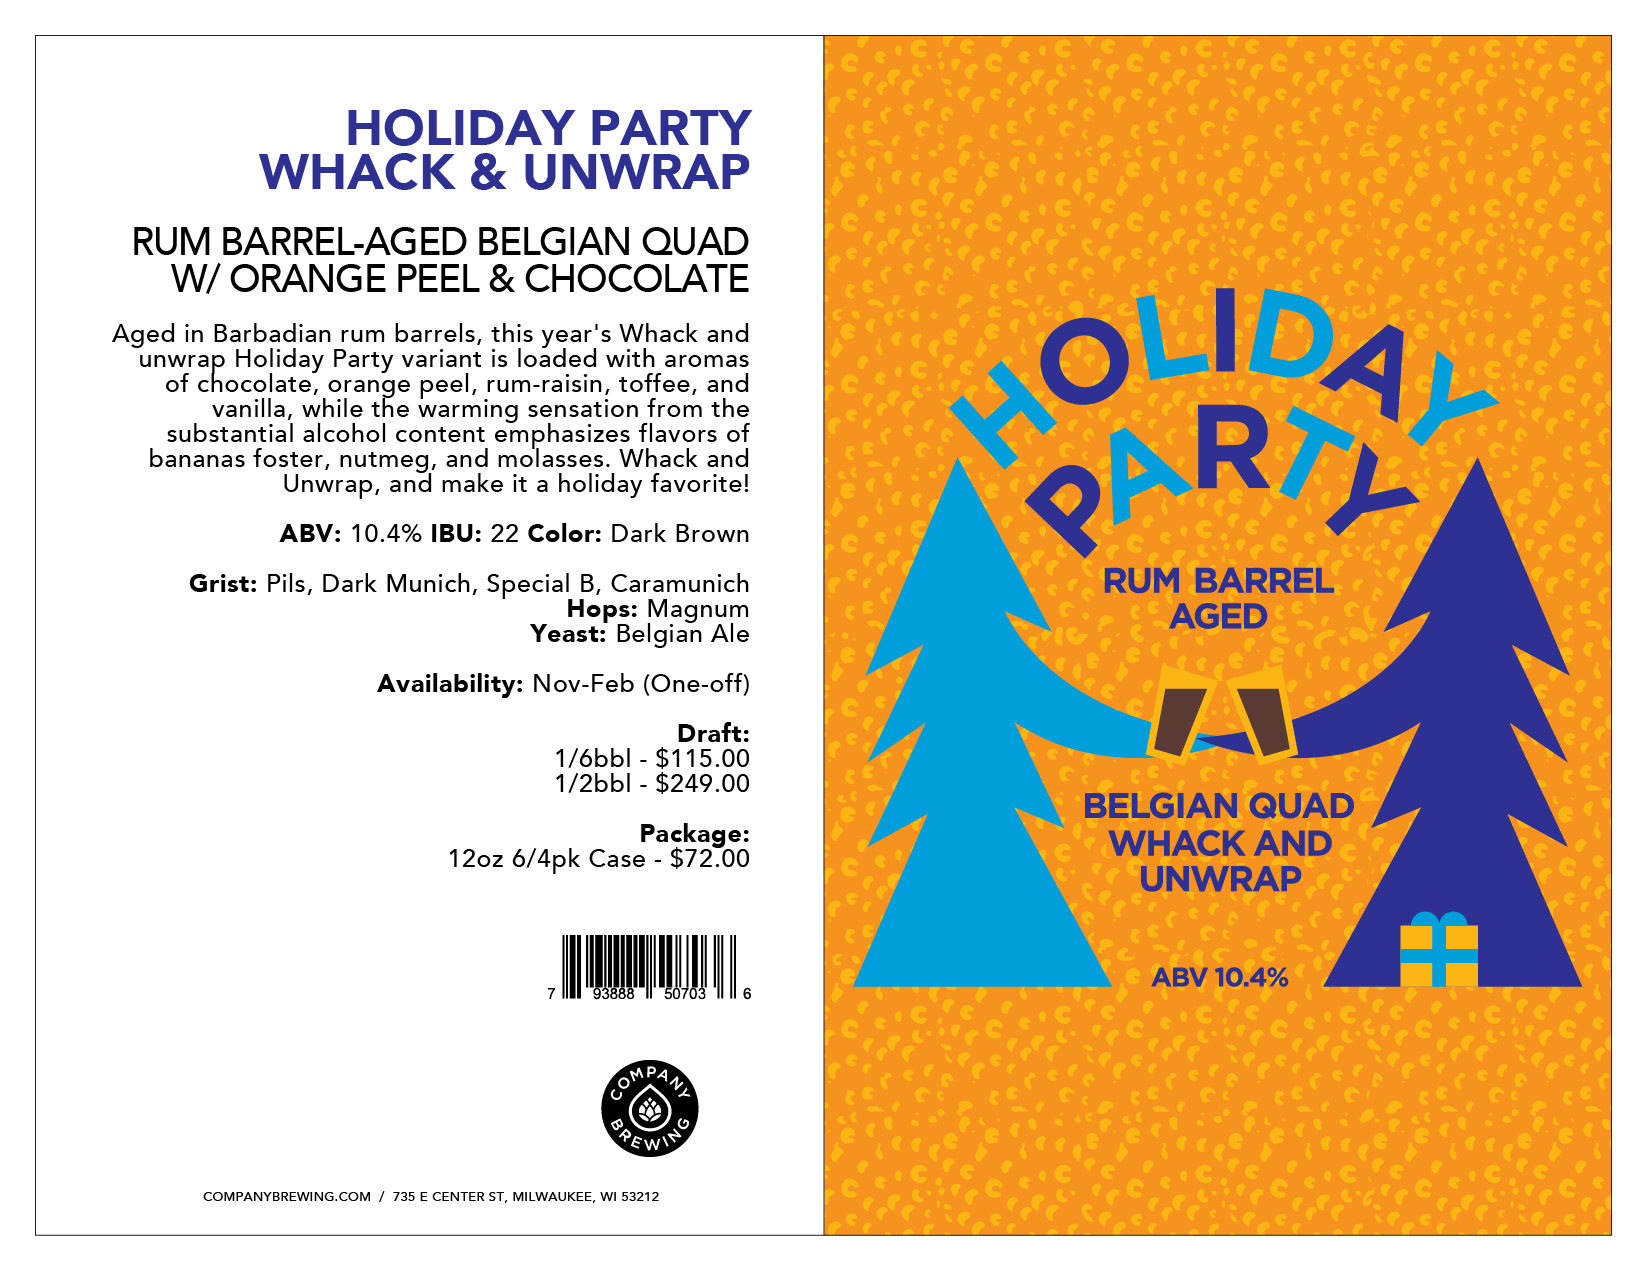 HolidayParty_WhackUnwrap_Sell-Sheet.png